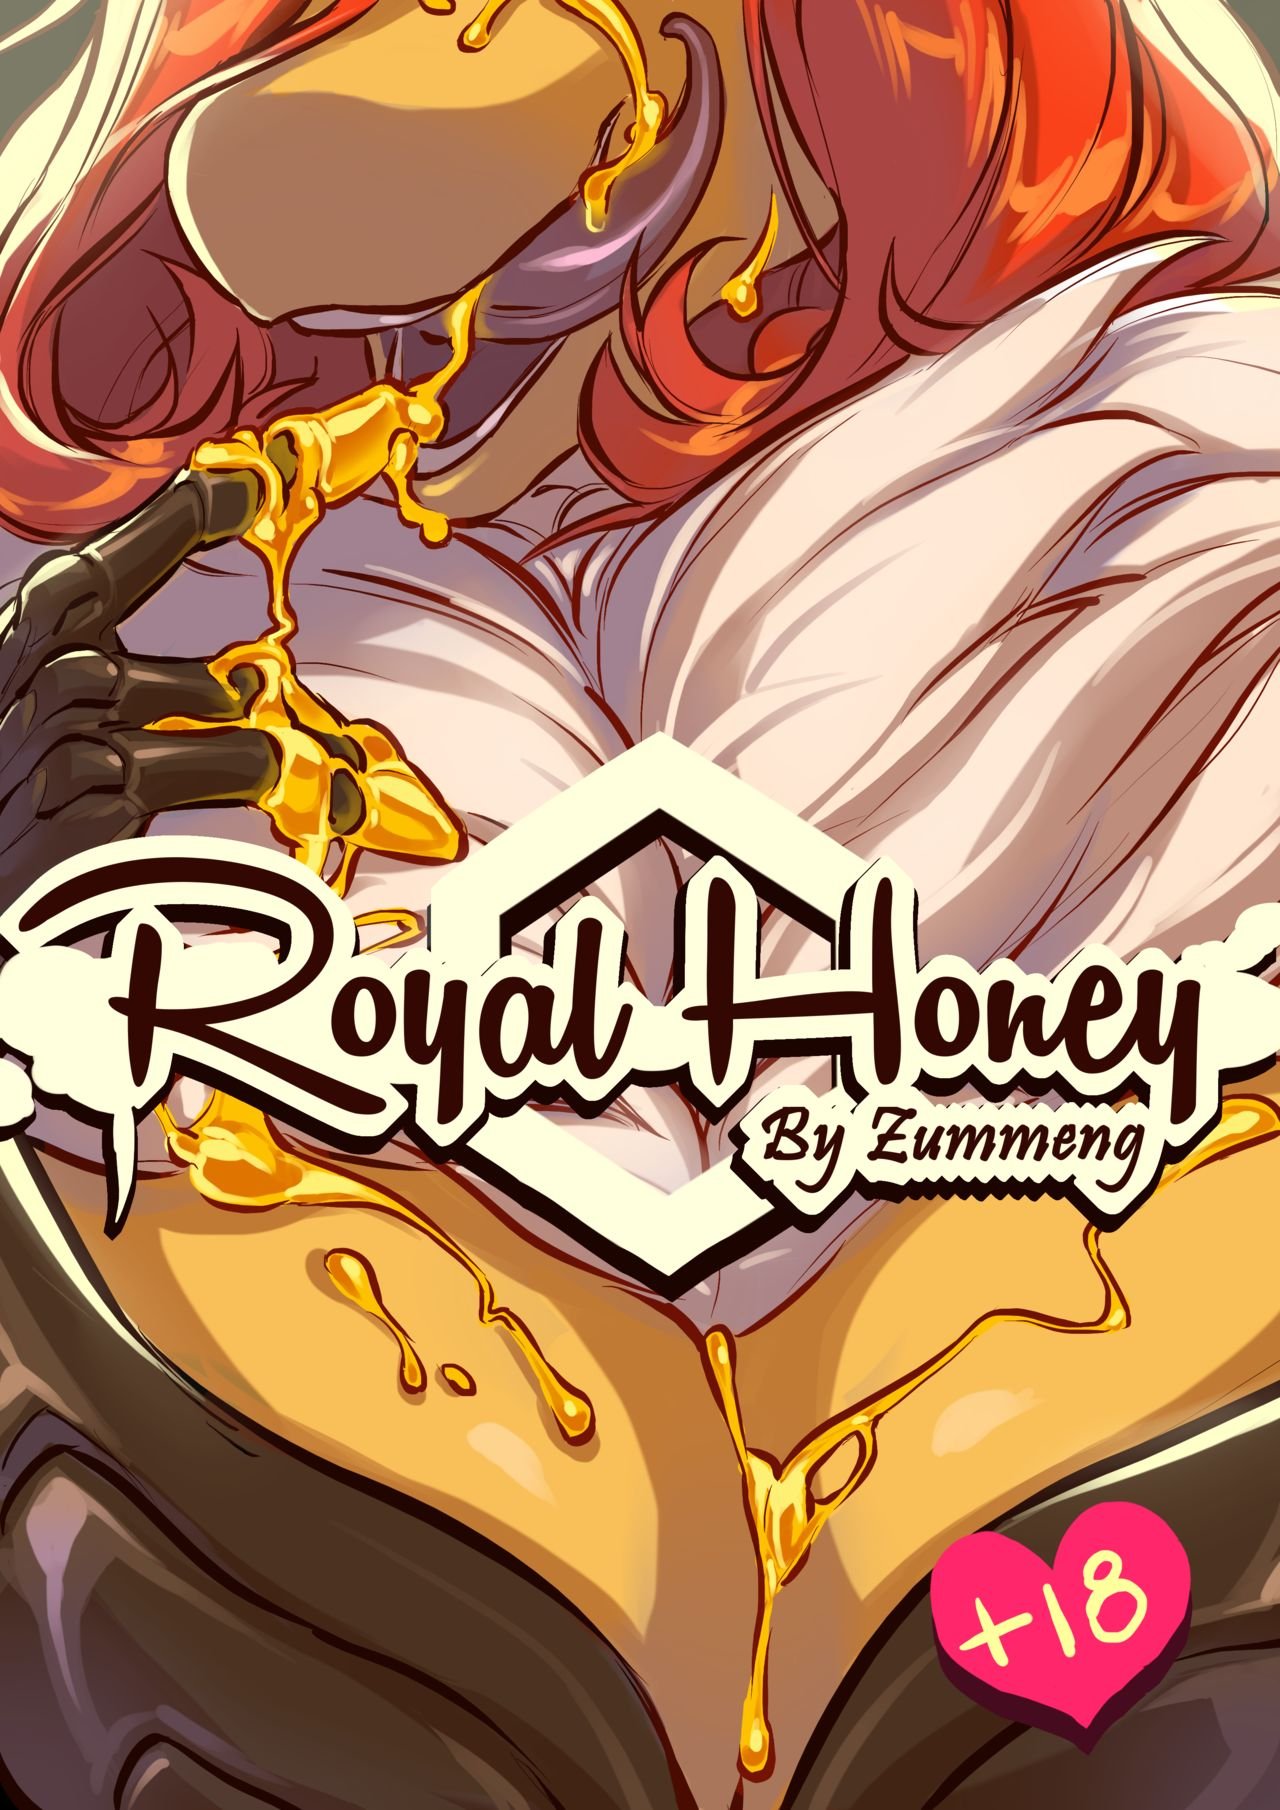 English Royals Porn - Zummeng Royal Honey English furry porn comic